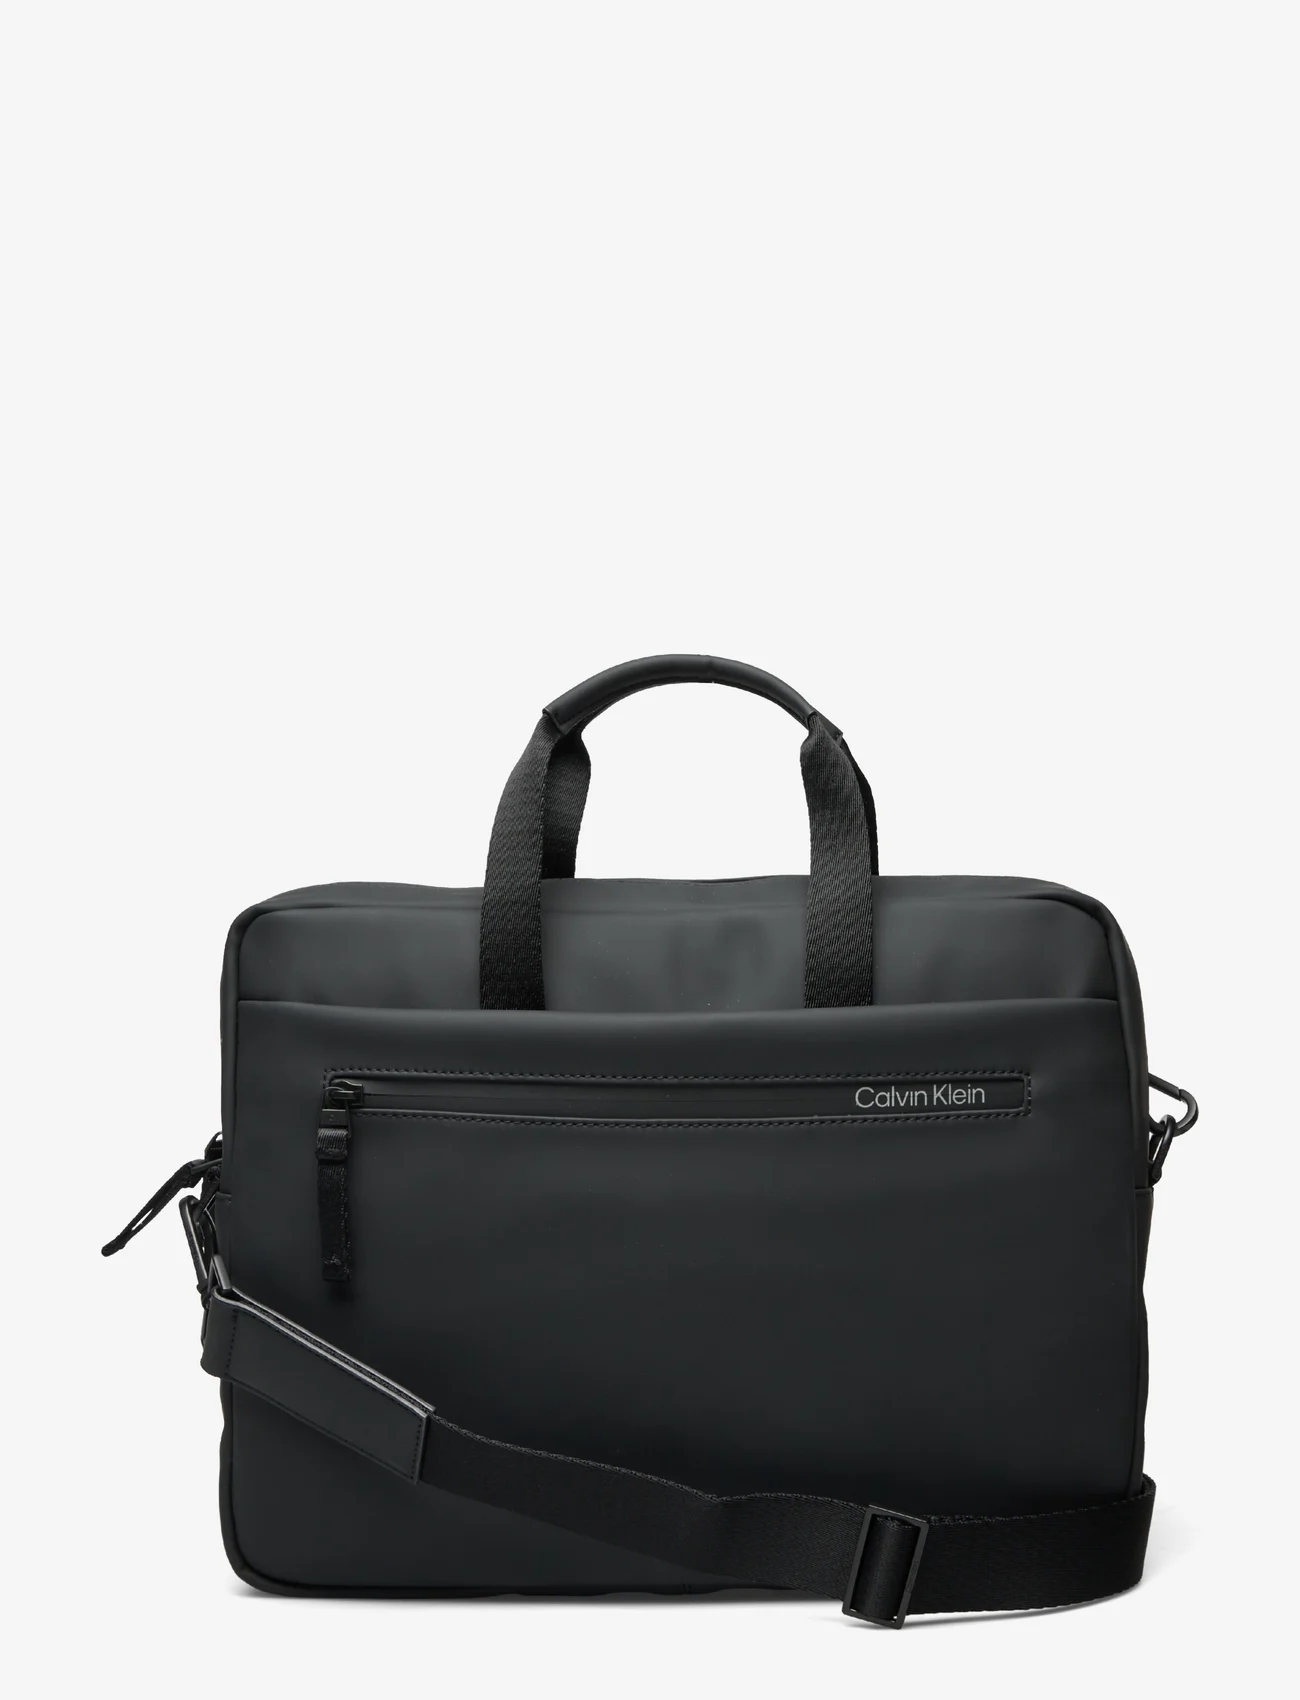 Calvin Klein - RUBBERIZED SLIM CONV LAPTOP BAG - laptoptaschen - ck black - 0